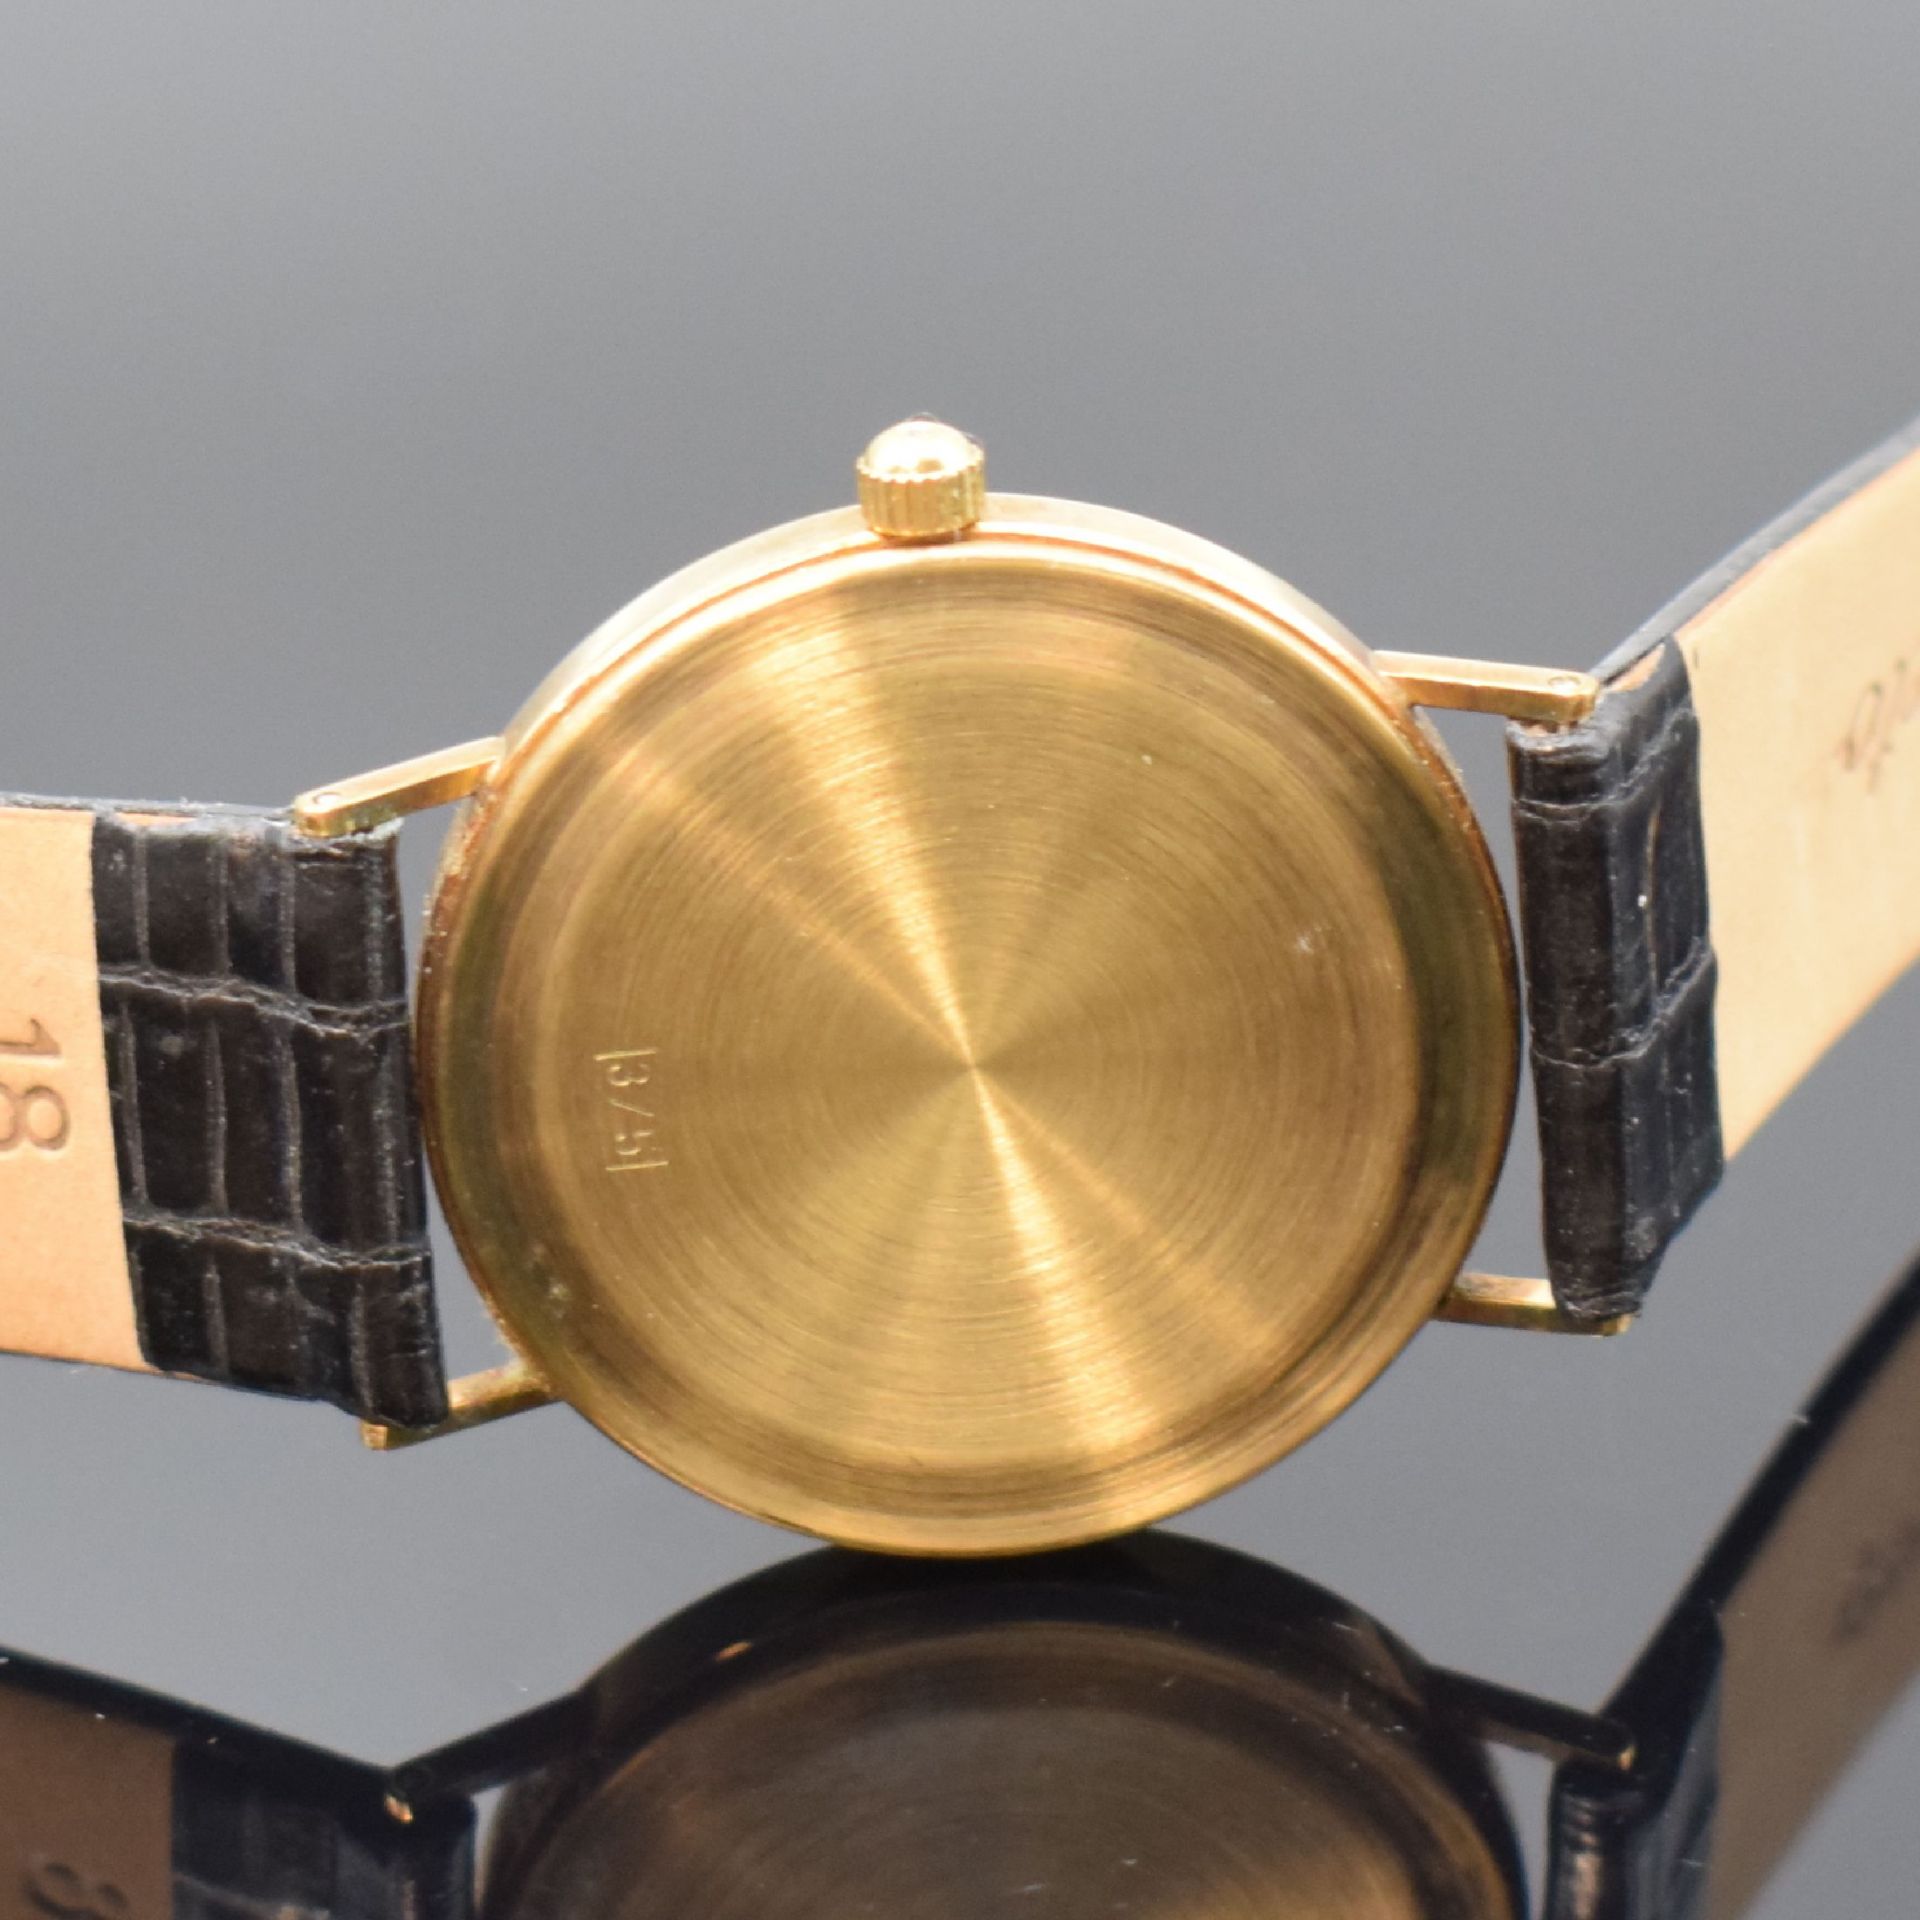 TEMPI D'ORO Armbanduhr in GG 375/000, Schweiz um 2010, - Bild 4 aus 4